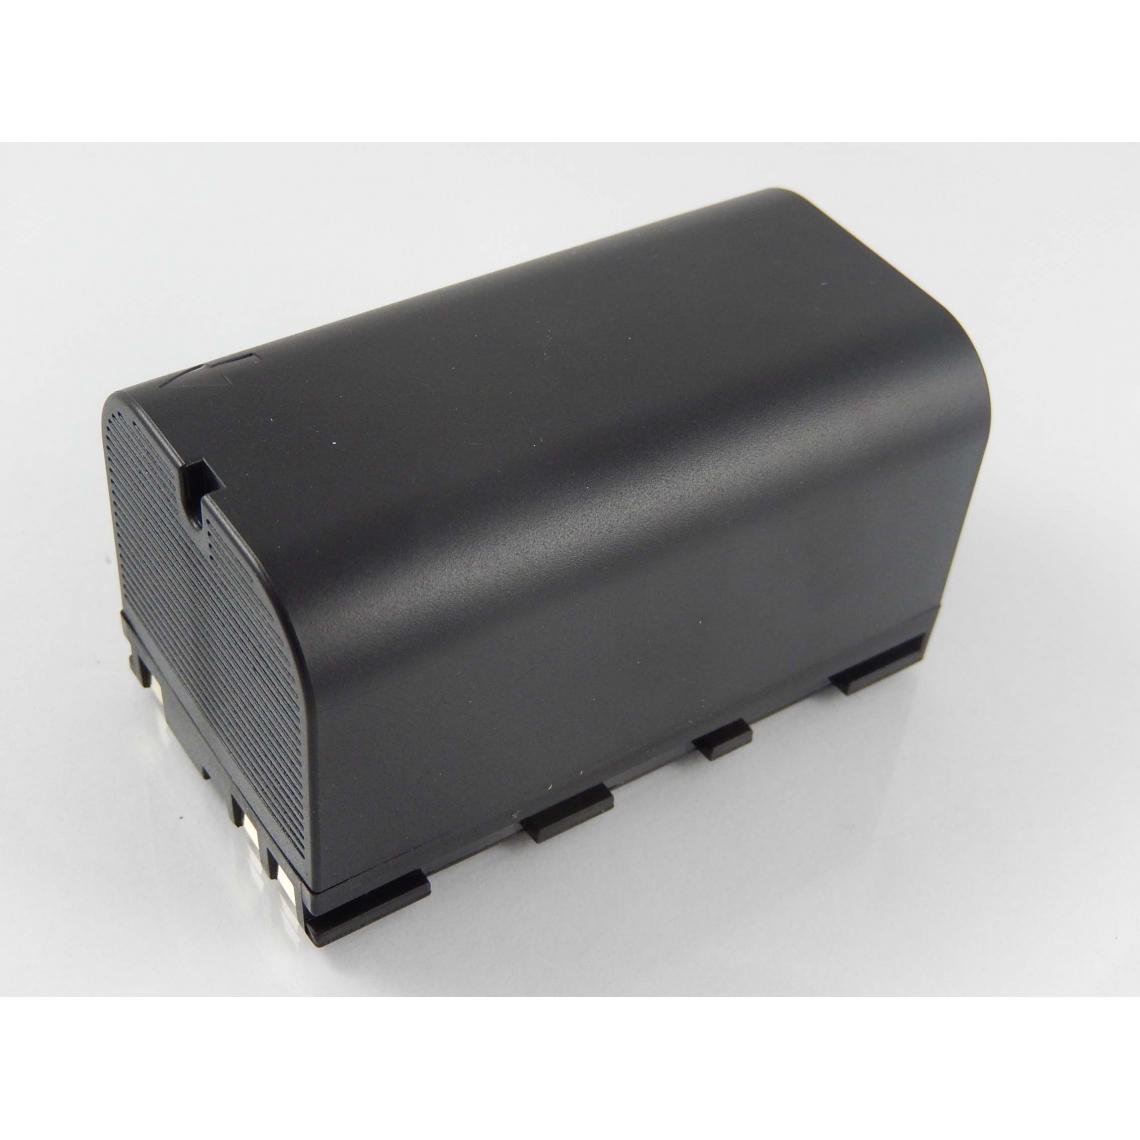 Vhbw - vhbw Batterie compatible avec Leica Piper 100, 100 Laser, 200 dispositif de mesure laser, outil de mesure (5600mAh, 7,4V, Li-ion) - Piles rechargeables